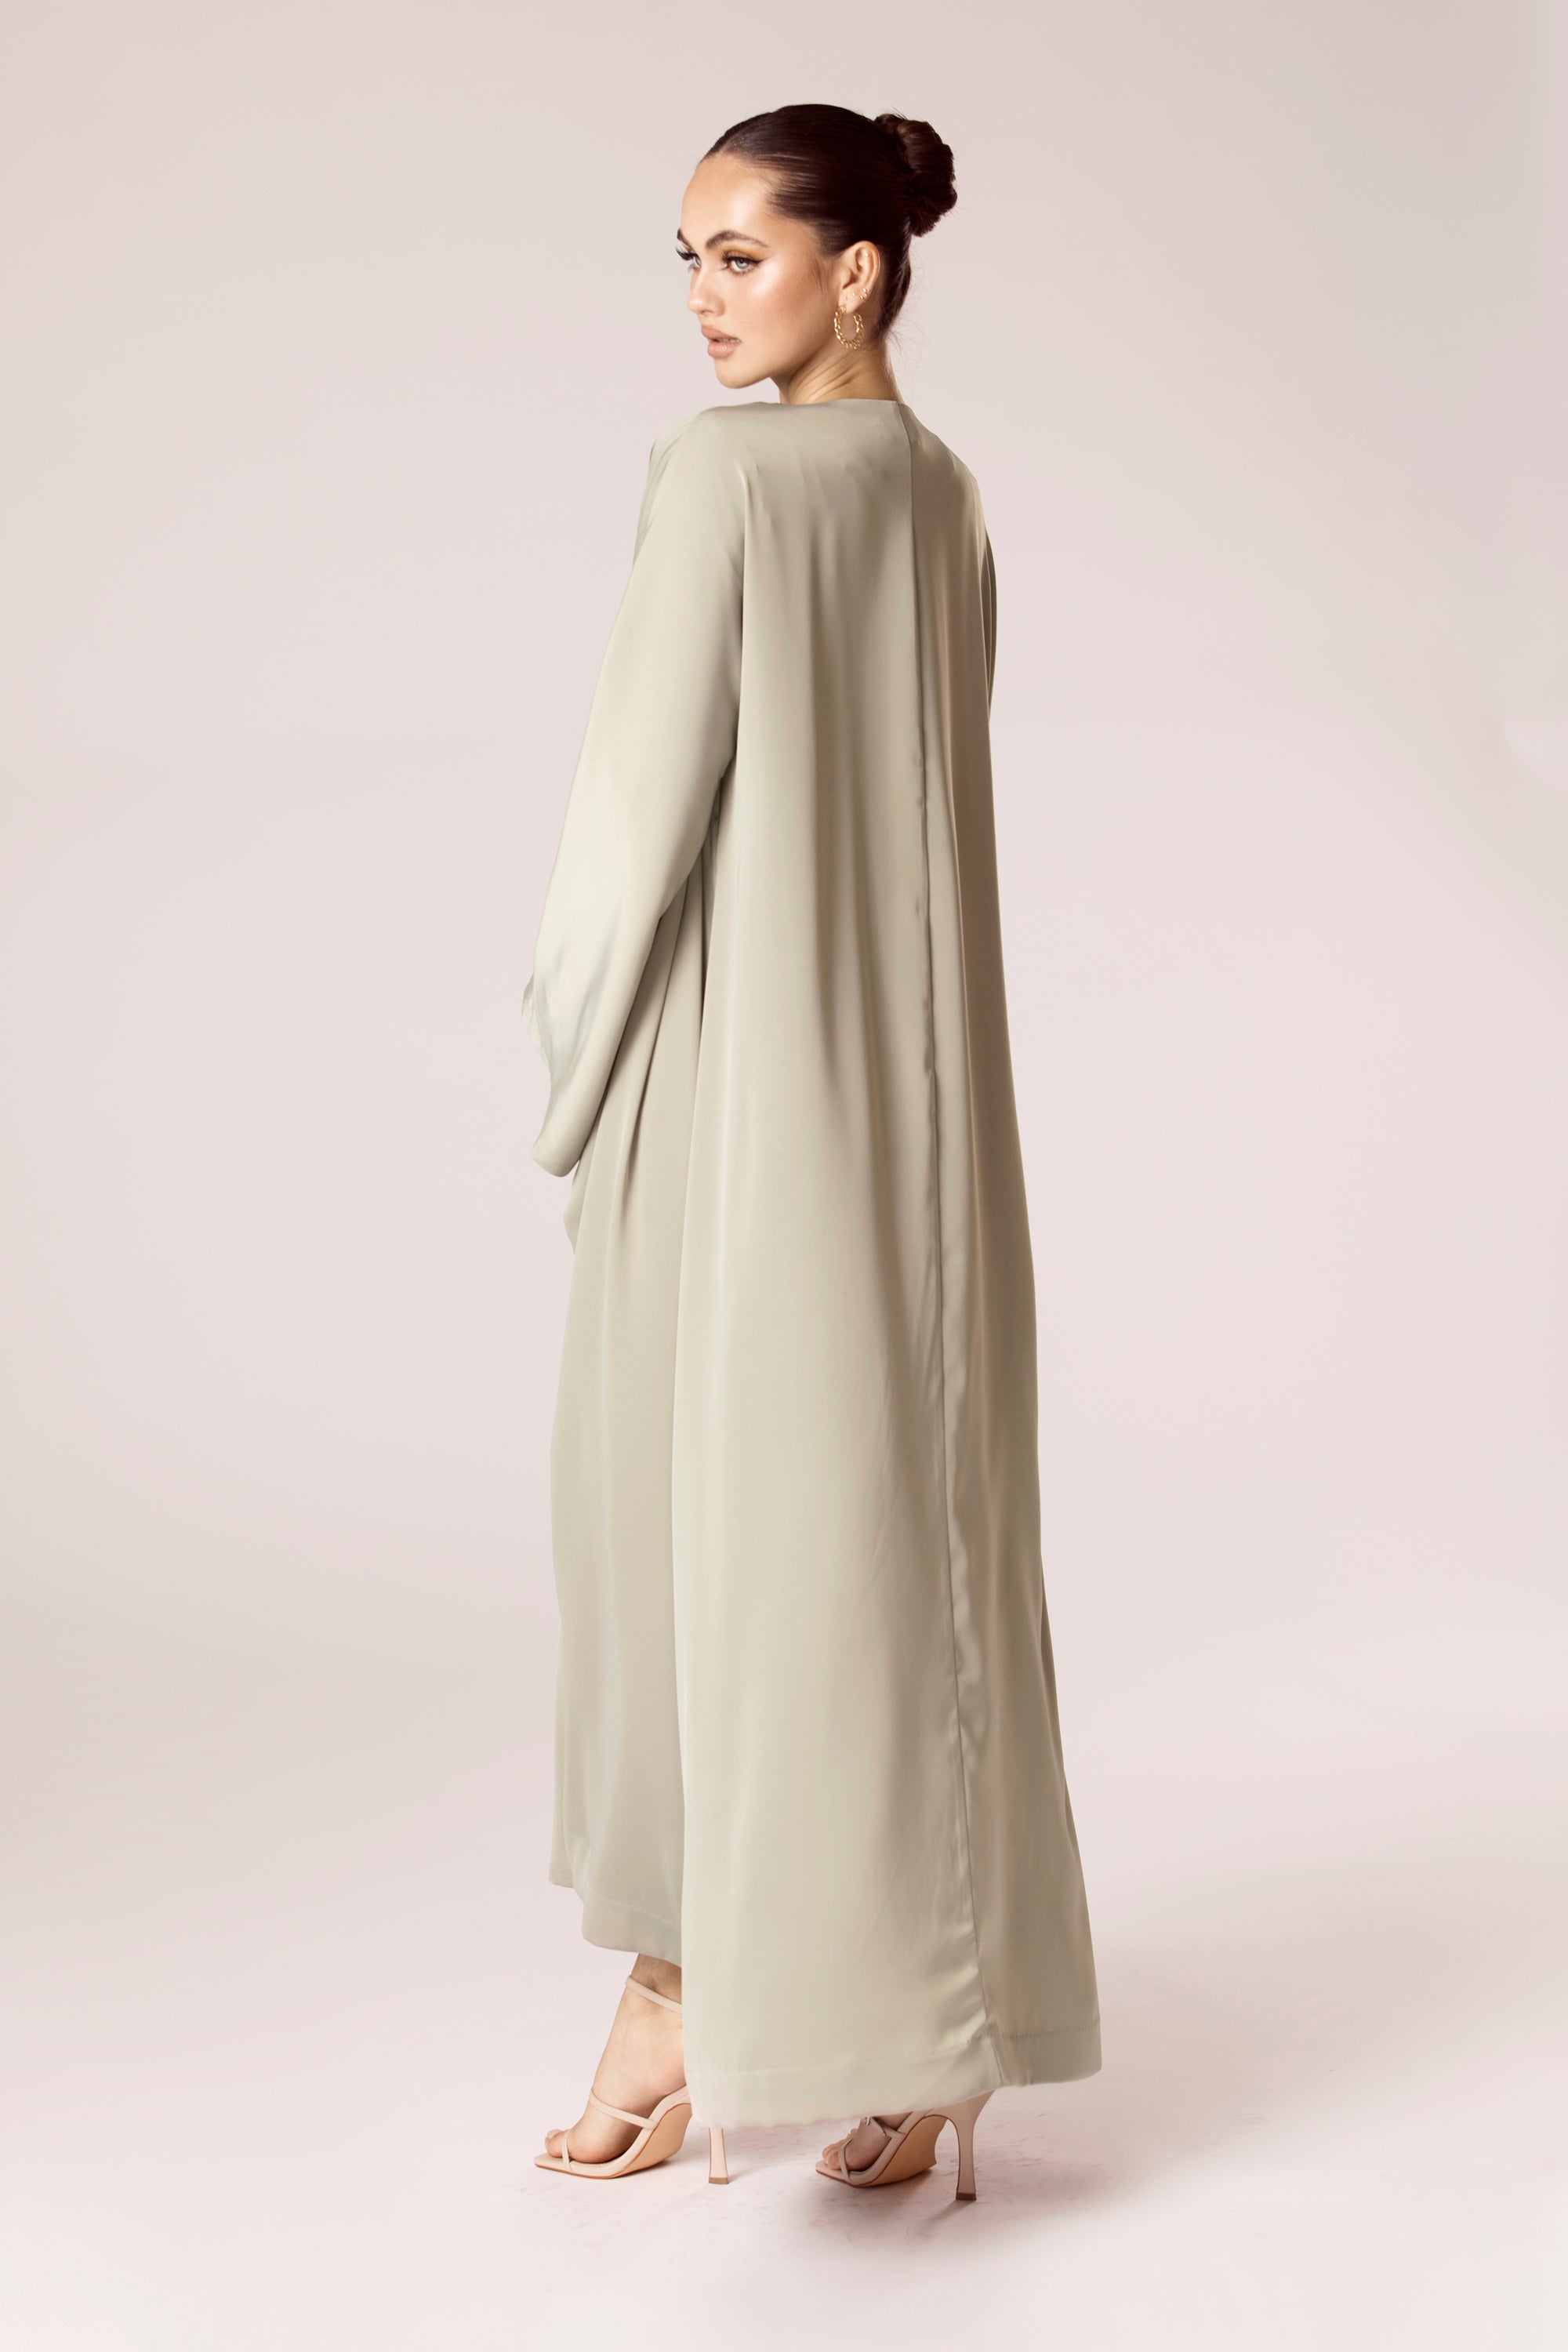 Angelina Open Abaya - Desert Sage Veiled Collection 